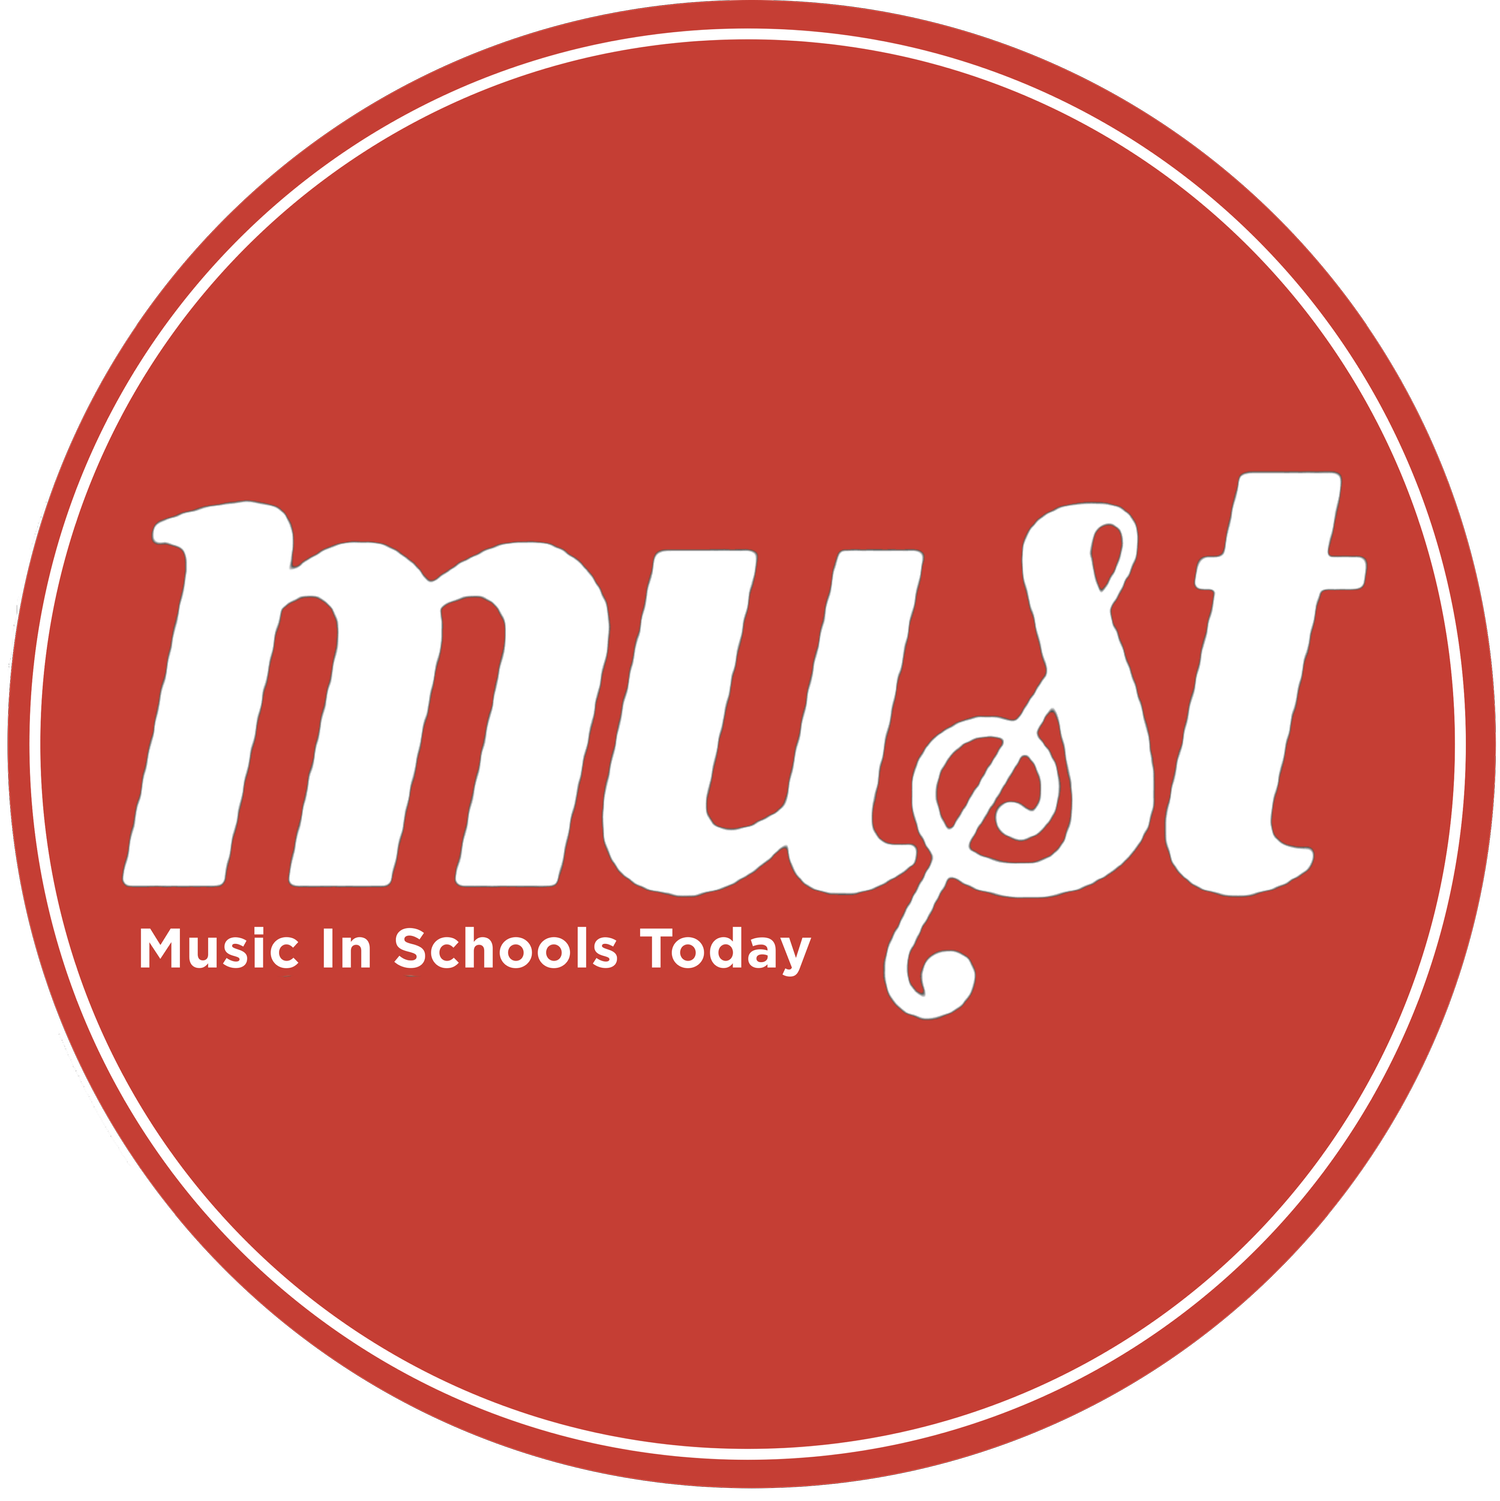 Music in Schools Today